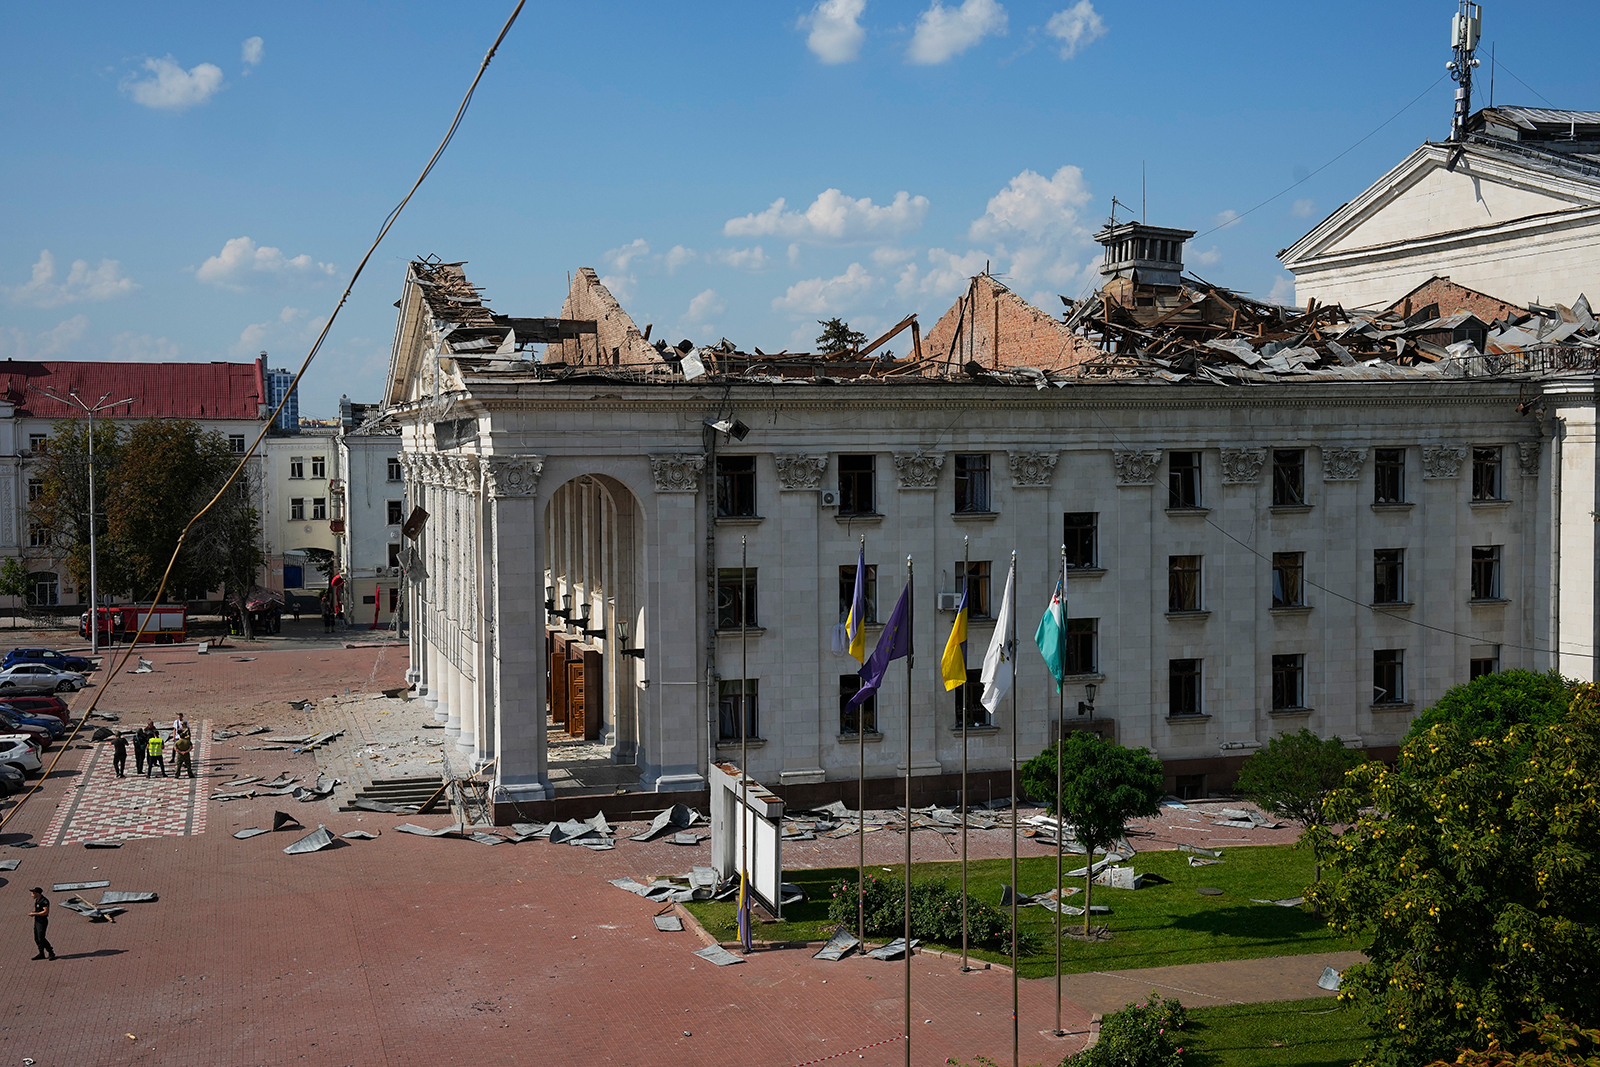 Taras Shevchenko Chernihiv Regional Academic Music and Drama Theatre is seen damaged by a Russian missile attack in Chernihiv, Ukraine, on August 19.